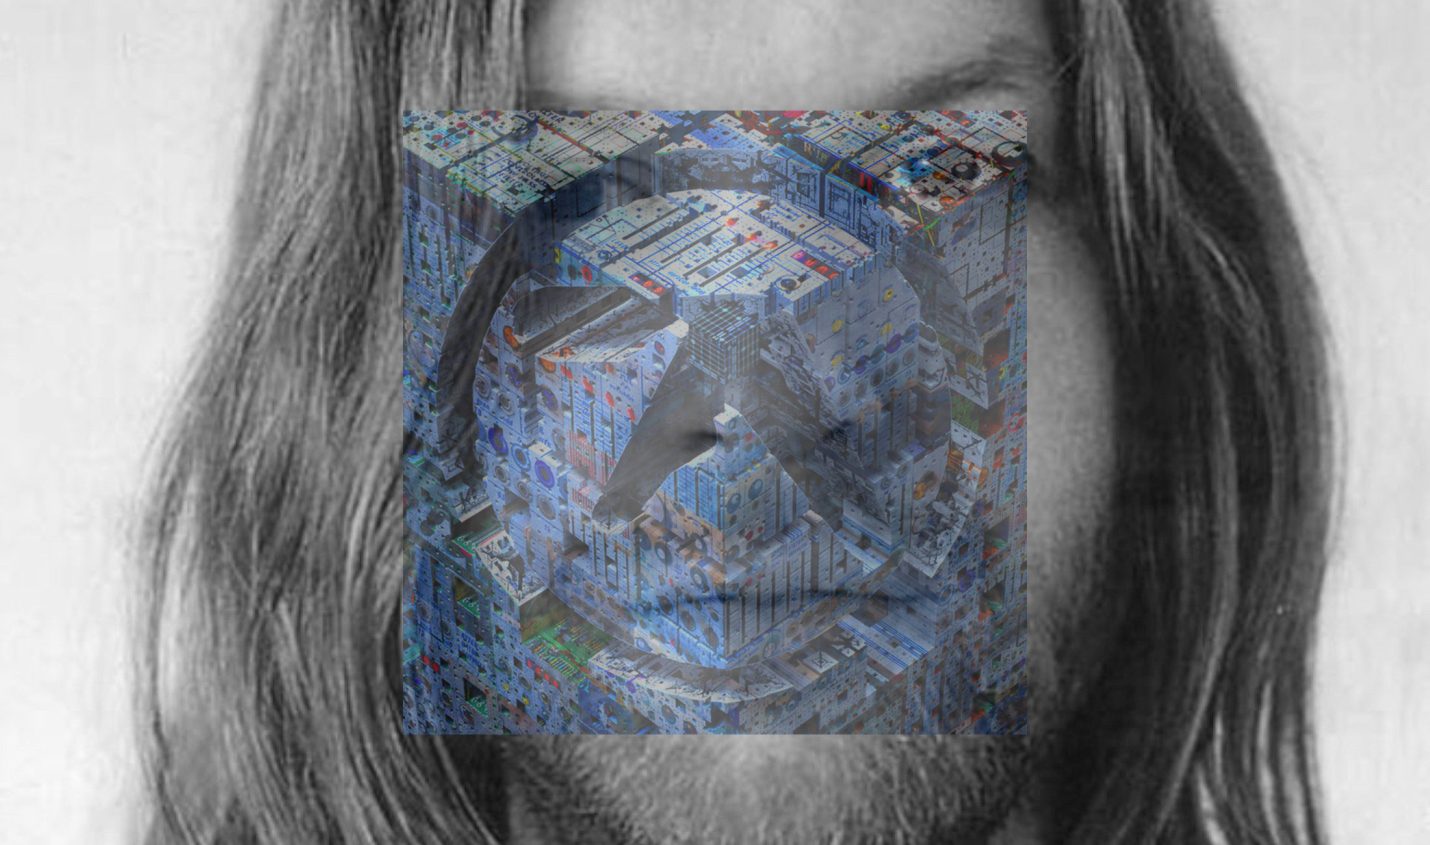 Aphex Twin: Teaser Track kündigt neue EP an